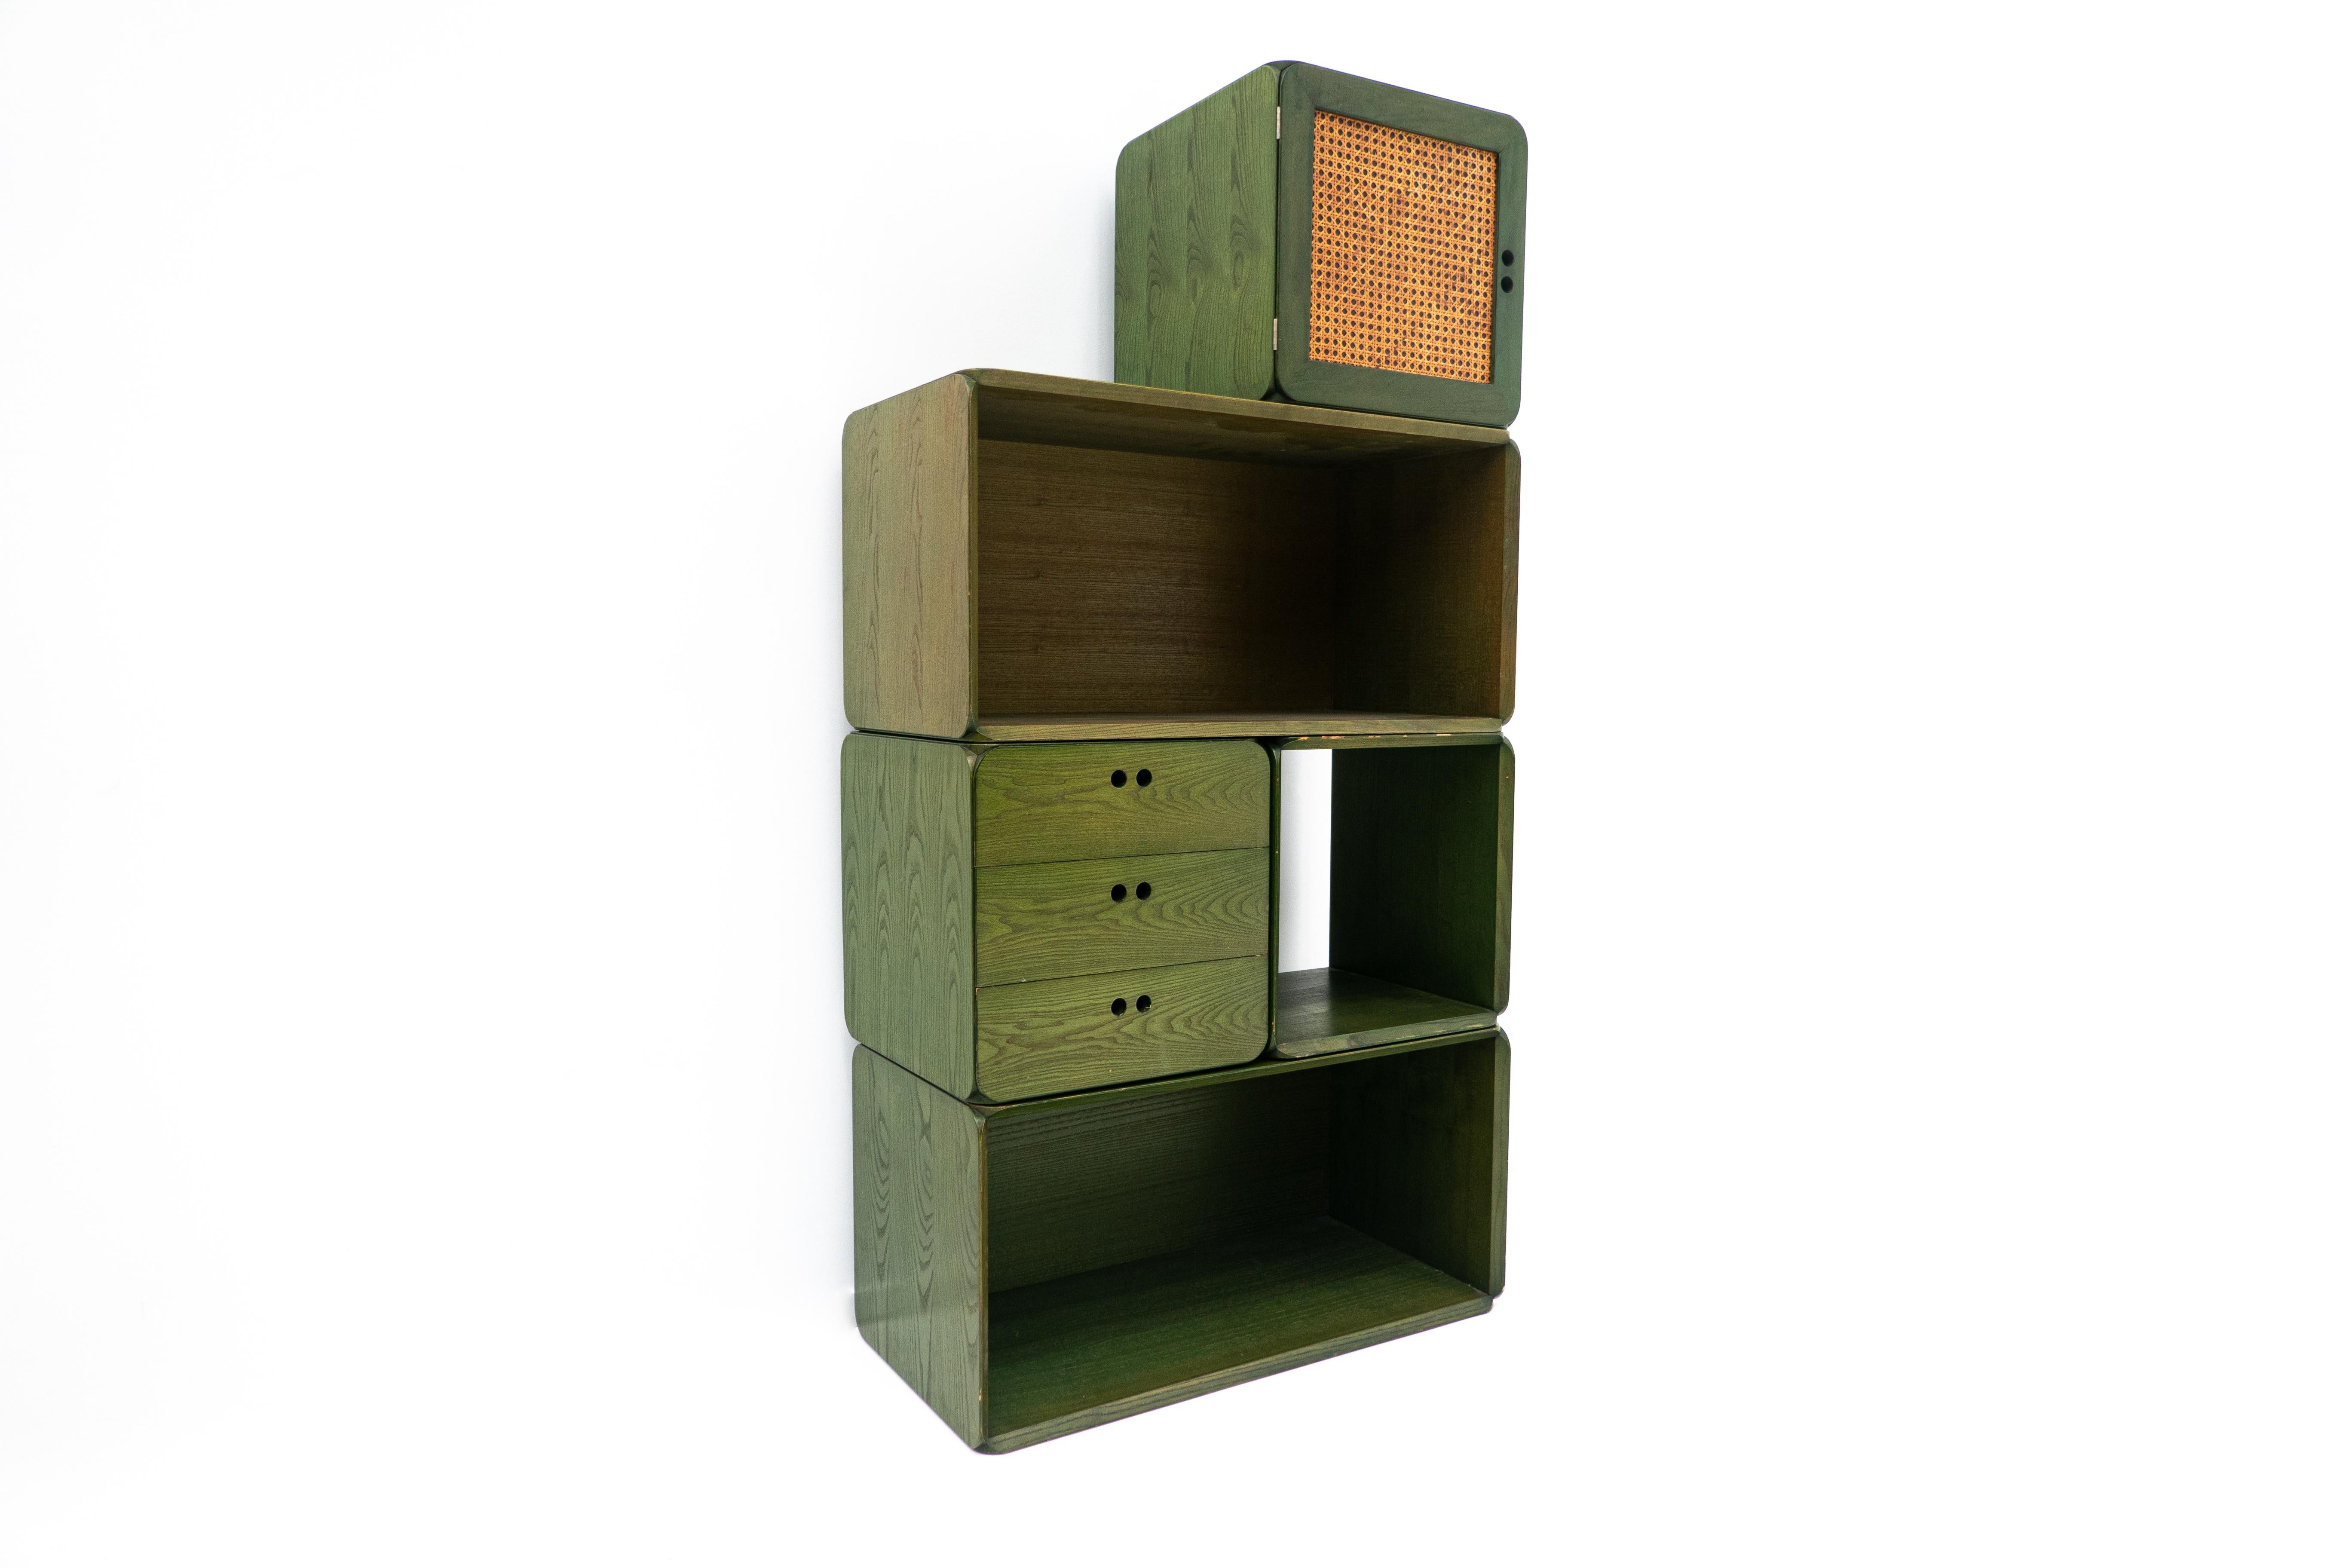 Mid-Century set of modular green wooden cubes by Derk Jan de Vries, The Netherlands, 1960s

Measures: 38x38x38 cm
76x38x38cm.